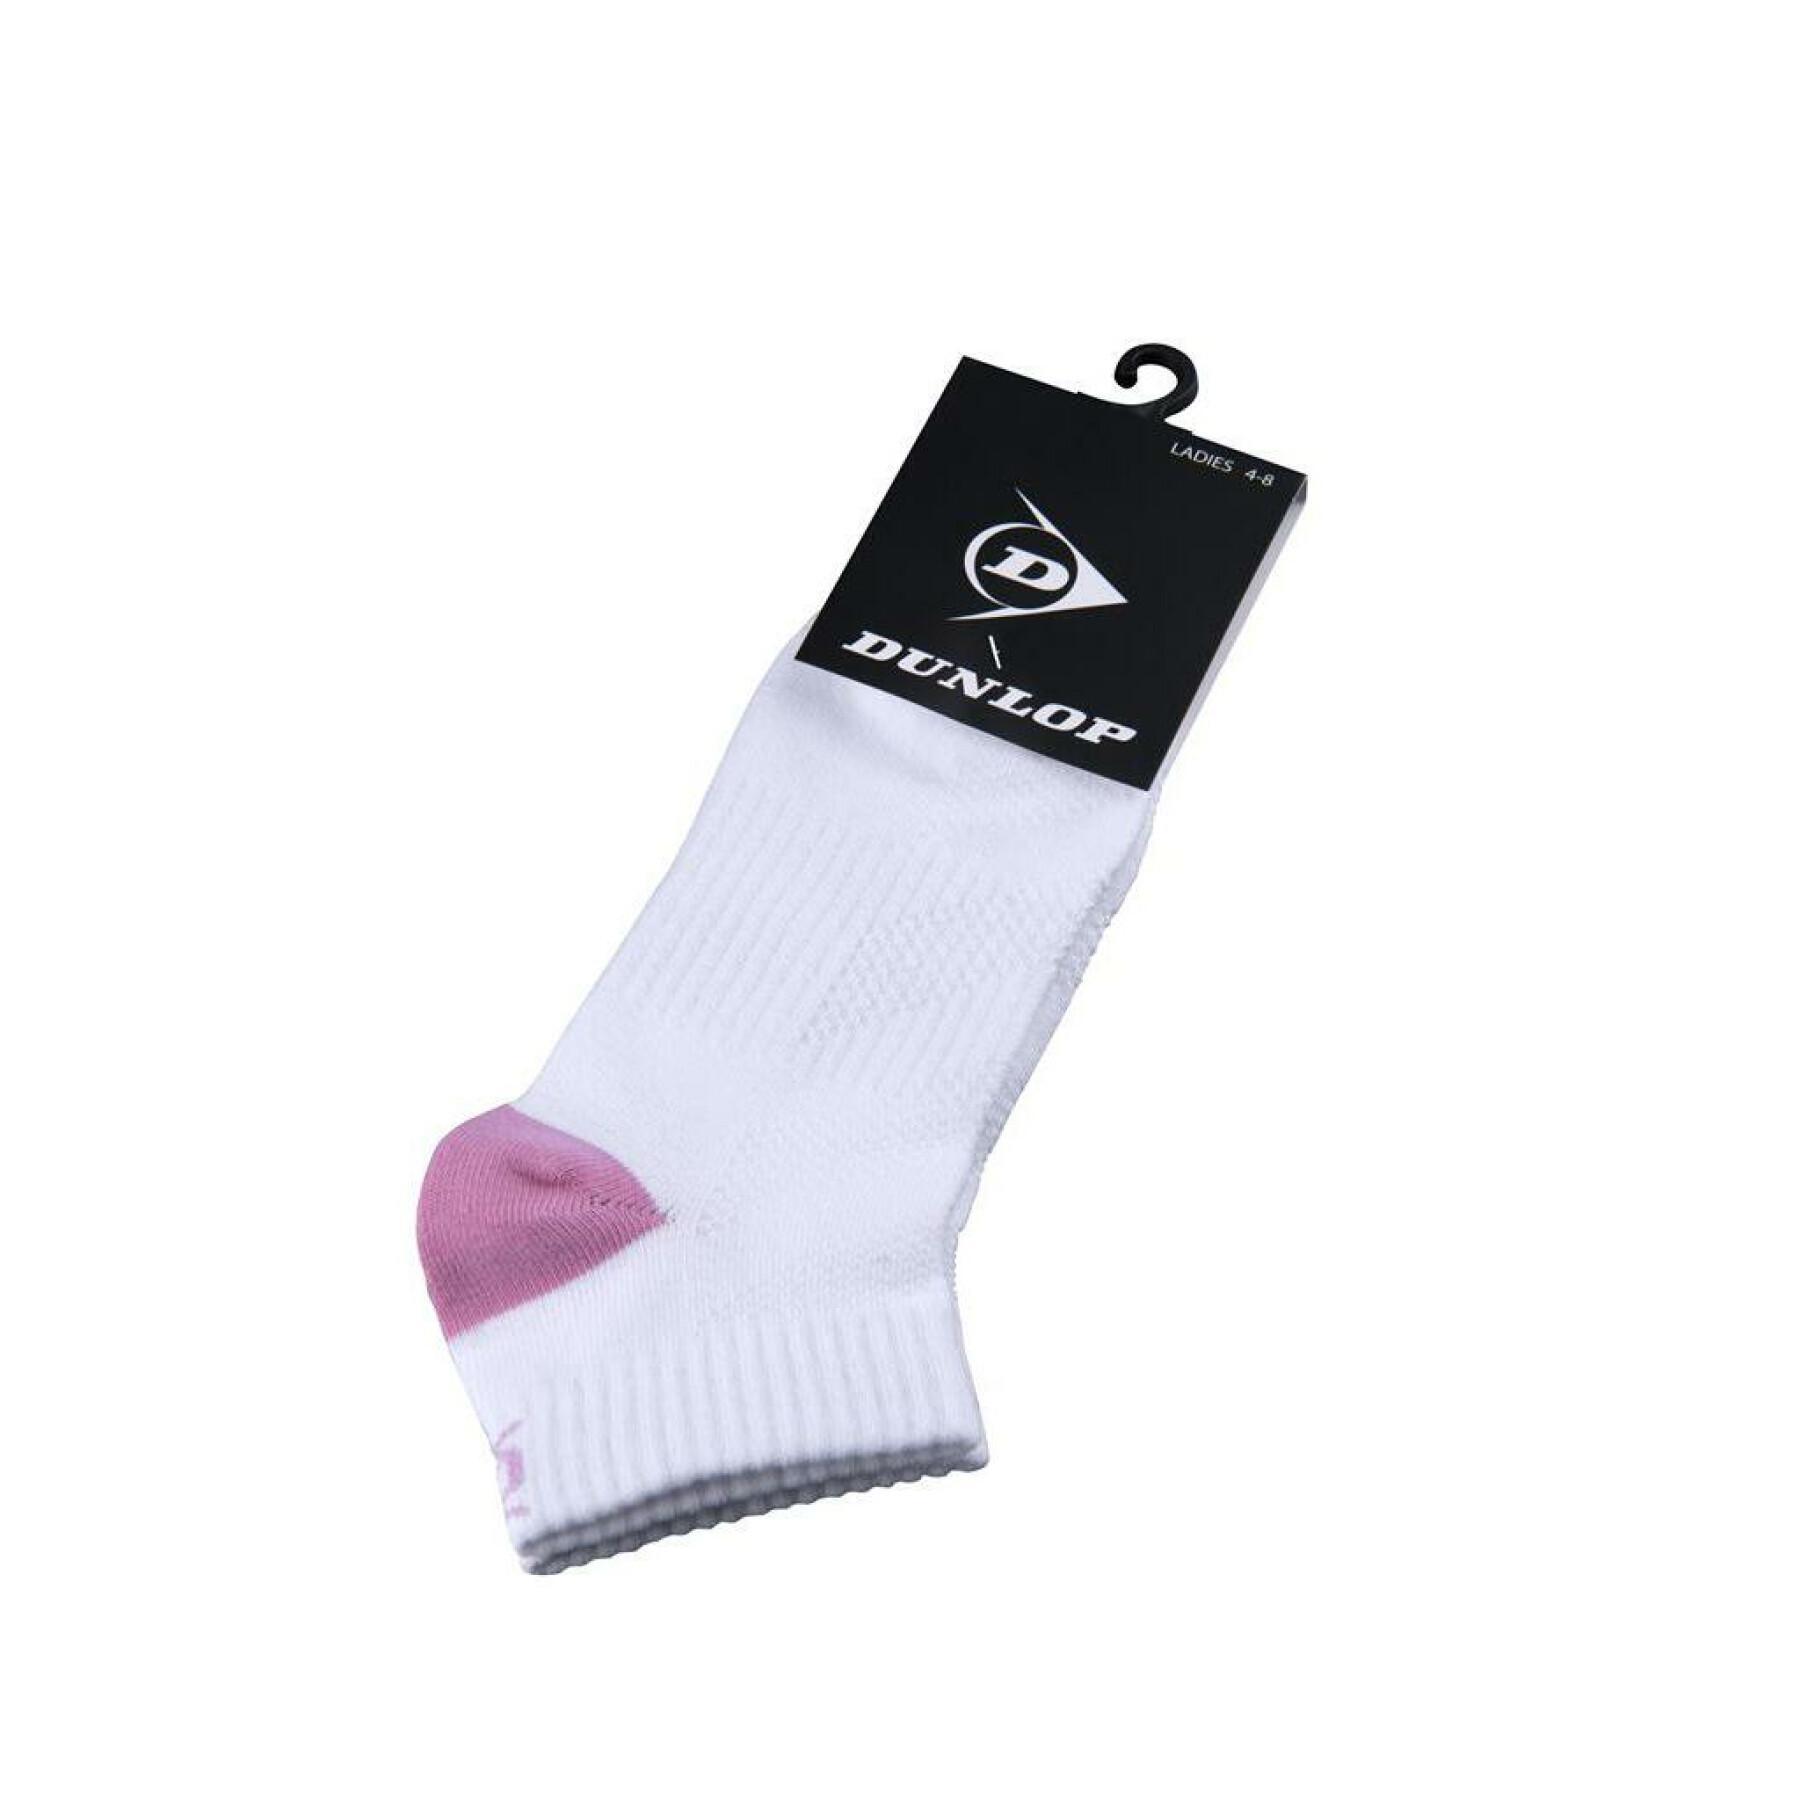 Damen-Socken Dunlop sport (3 paires)